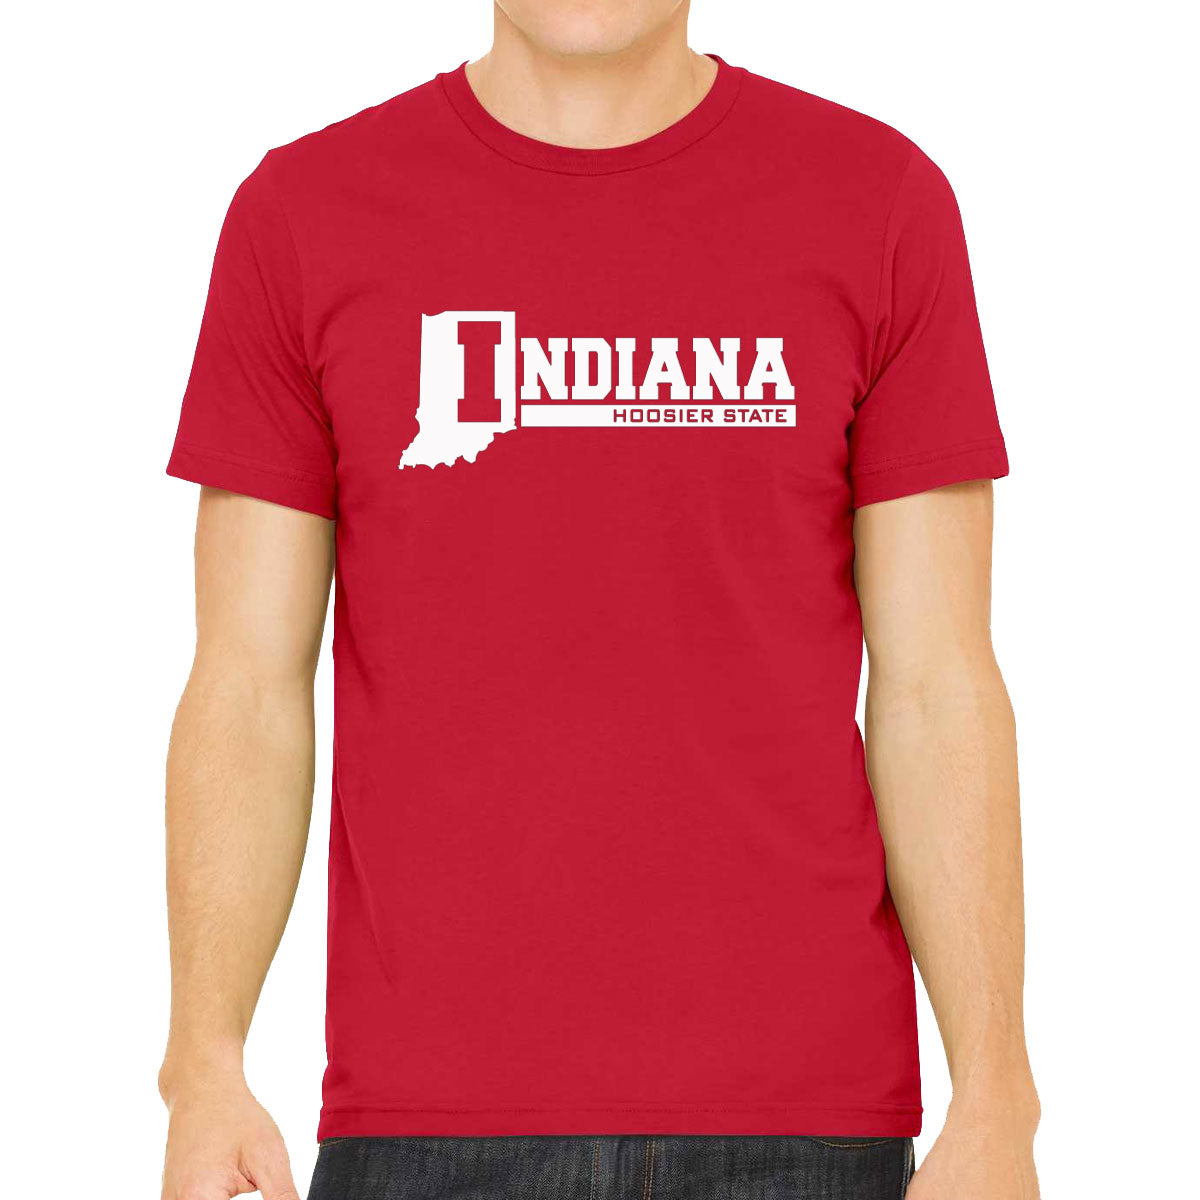 Indiana Hoosier State Men's T-shirt